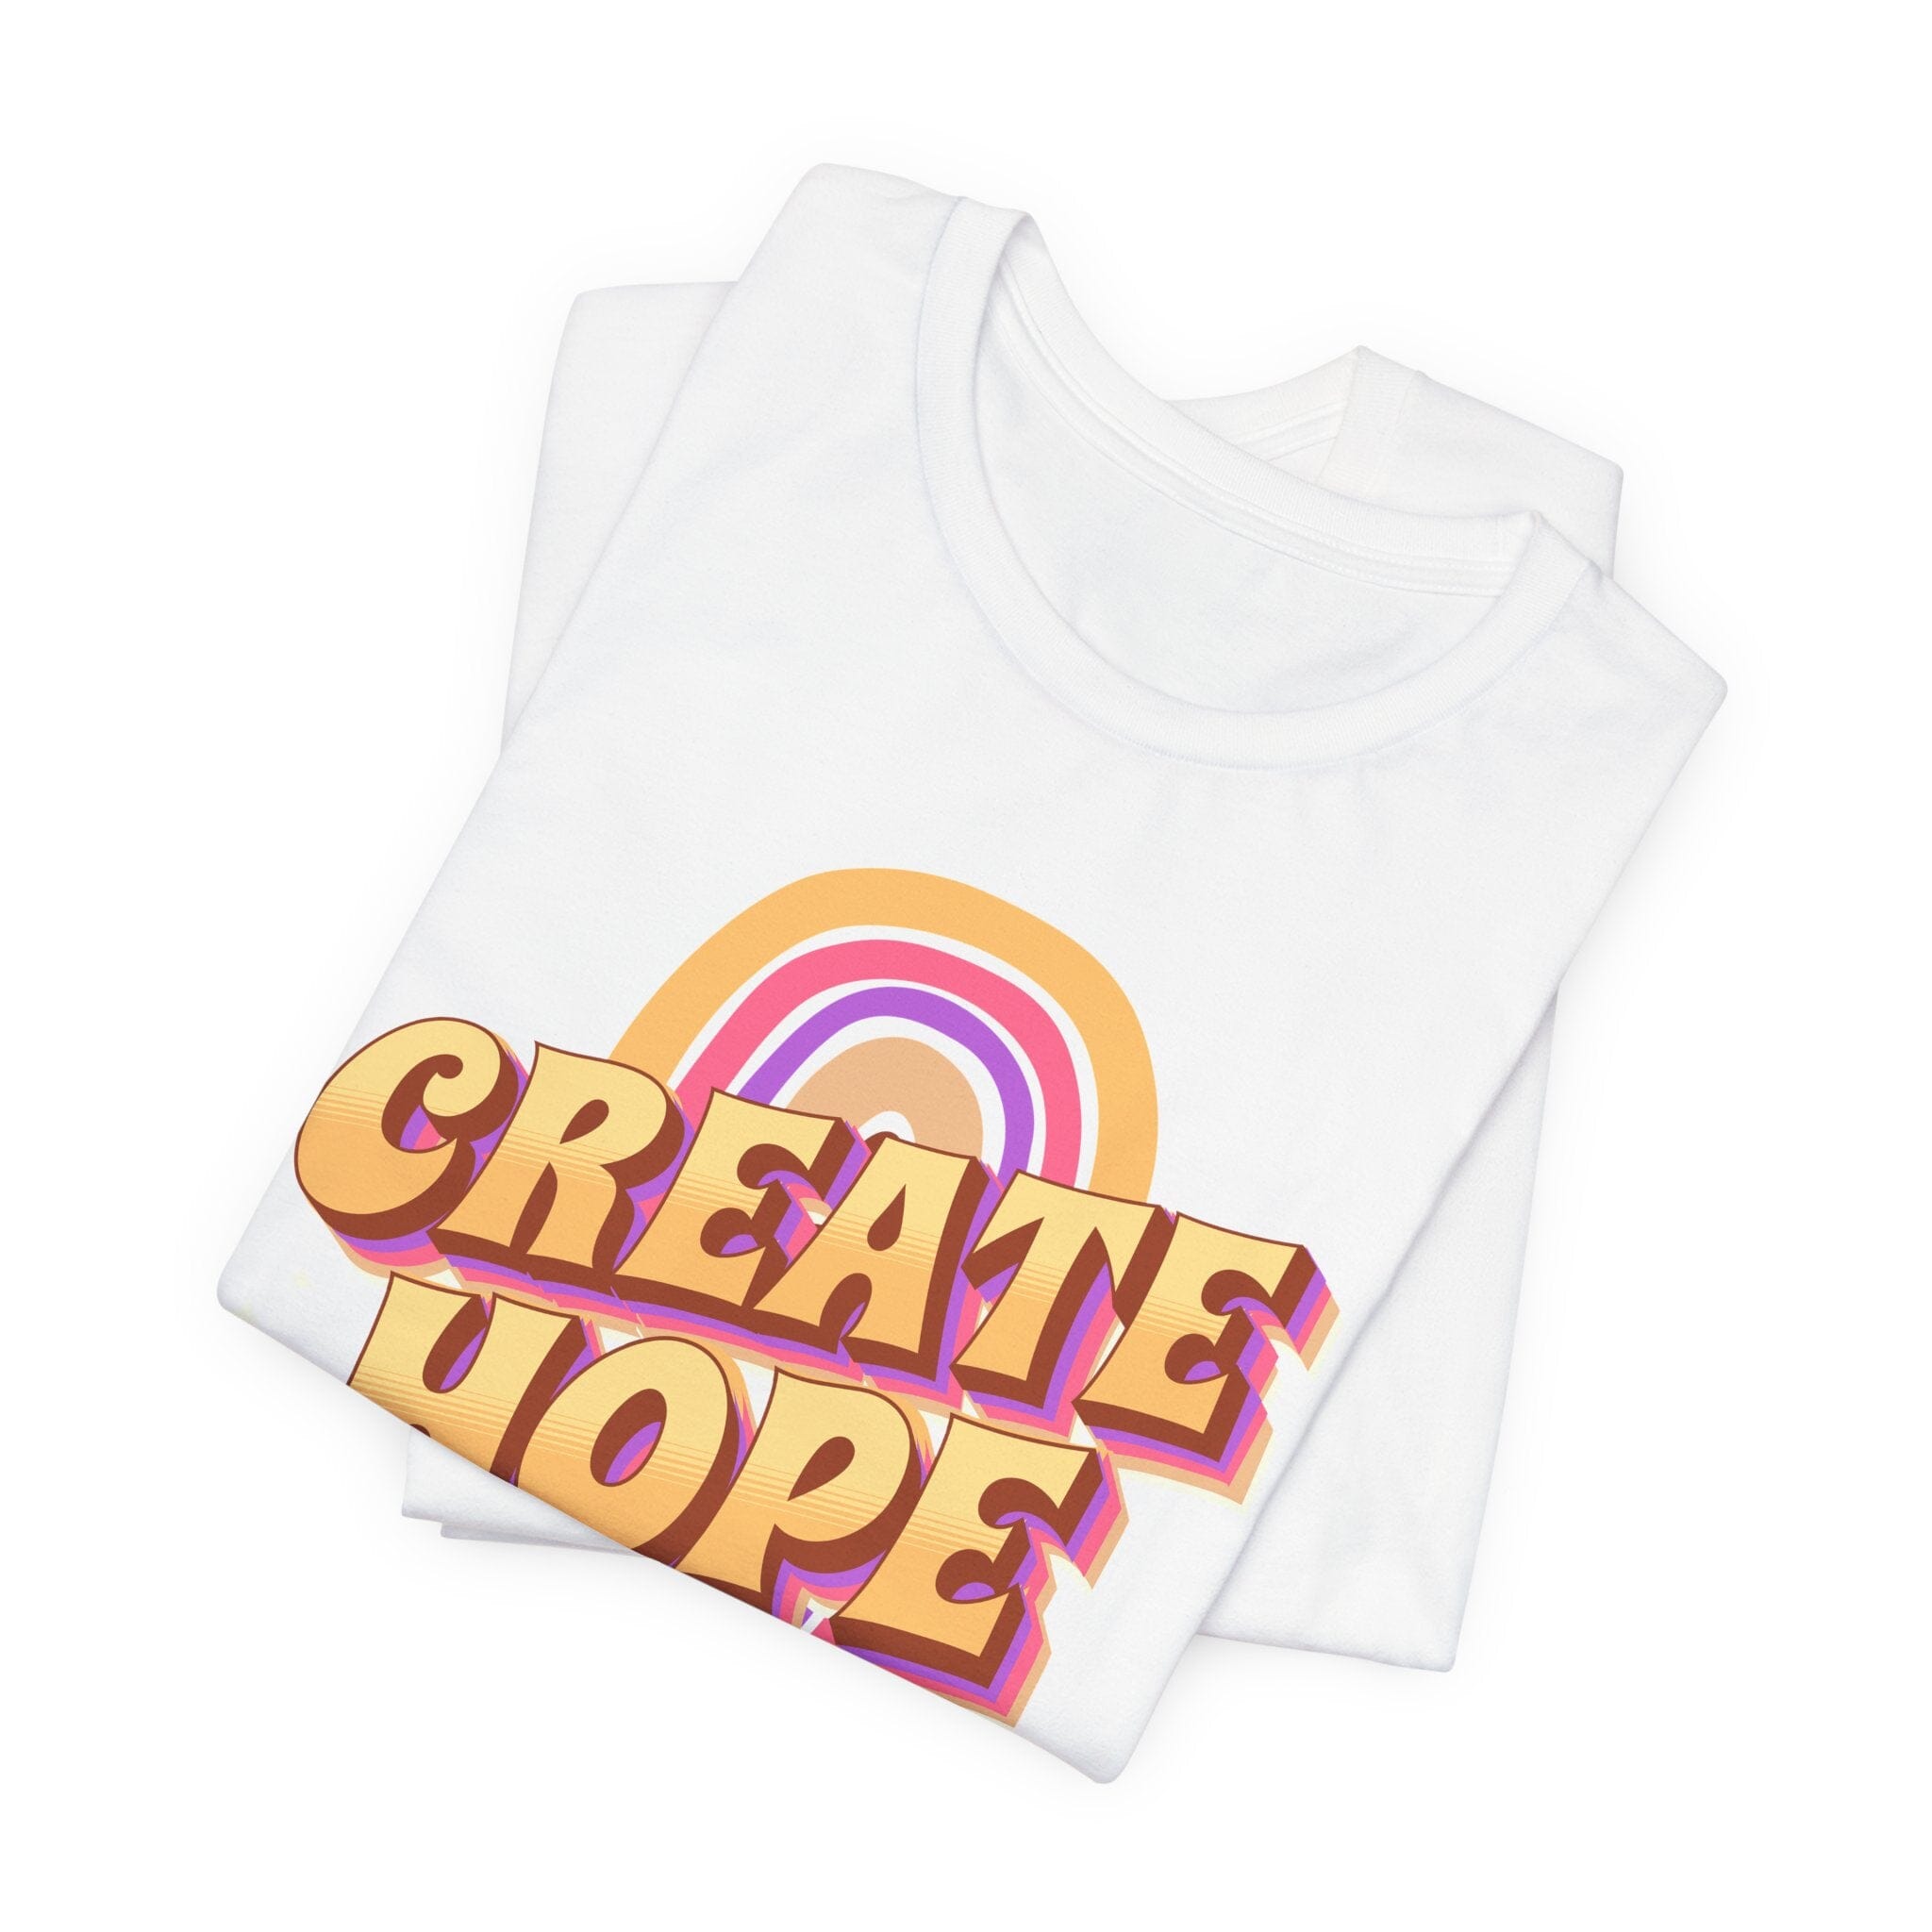 Unisex Groovy Create Hope | Womens Short Sleeve Bella Tee | 3 colors | S-3XL | Hope Swag T-Shirt Printify 